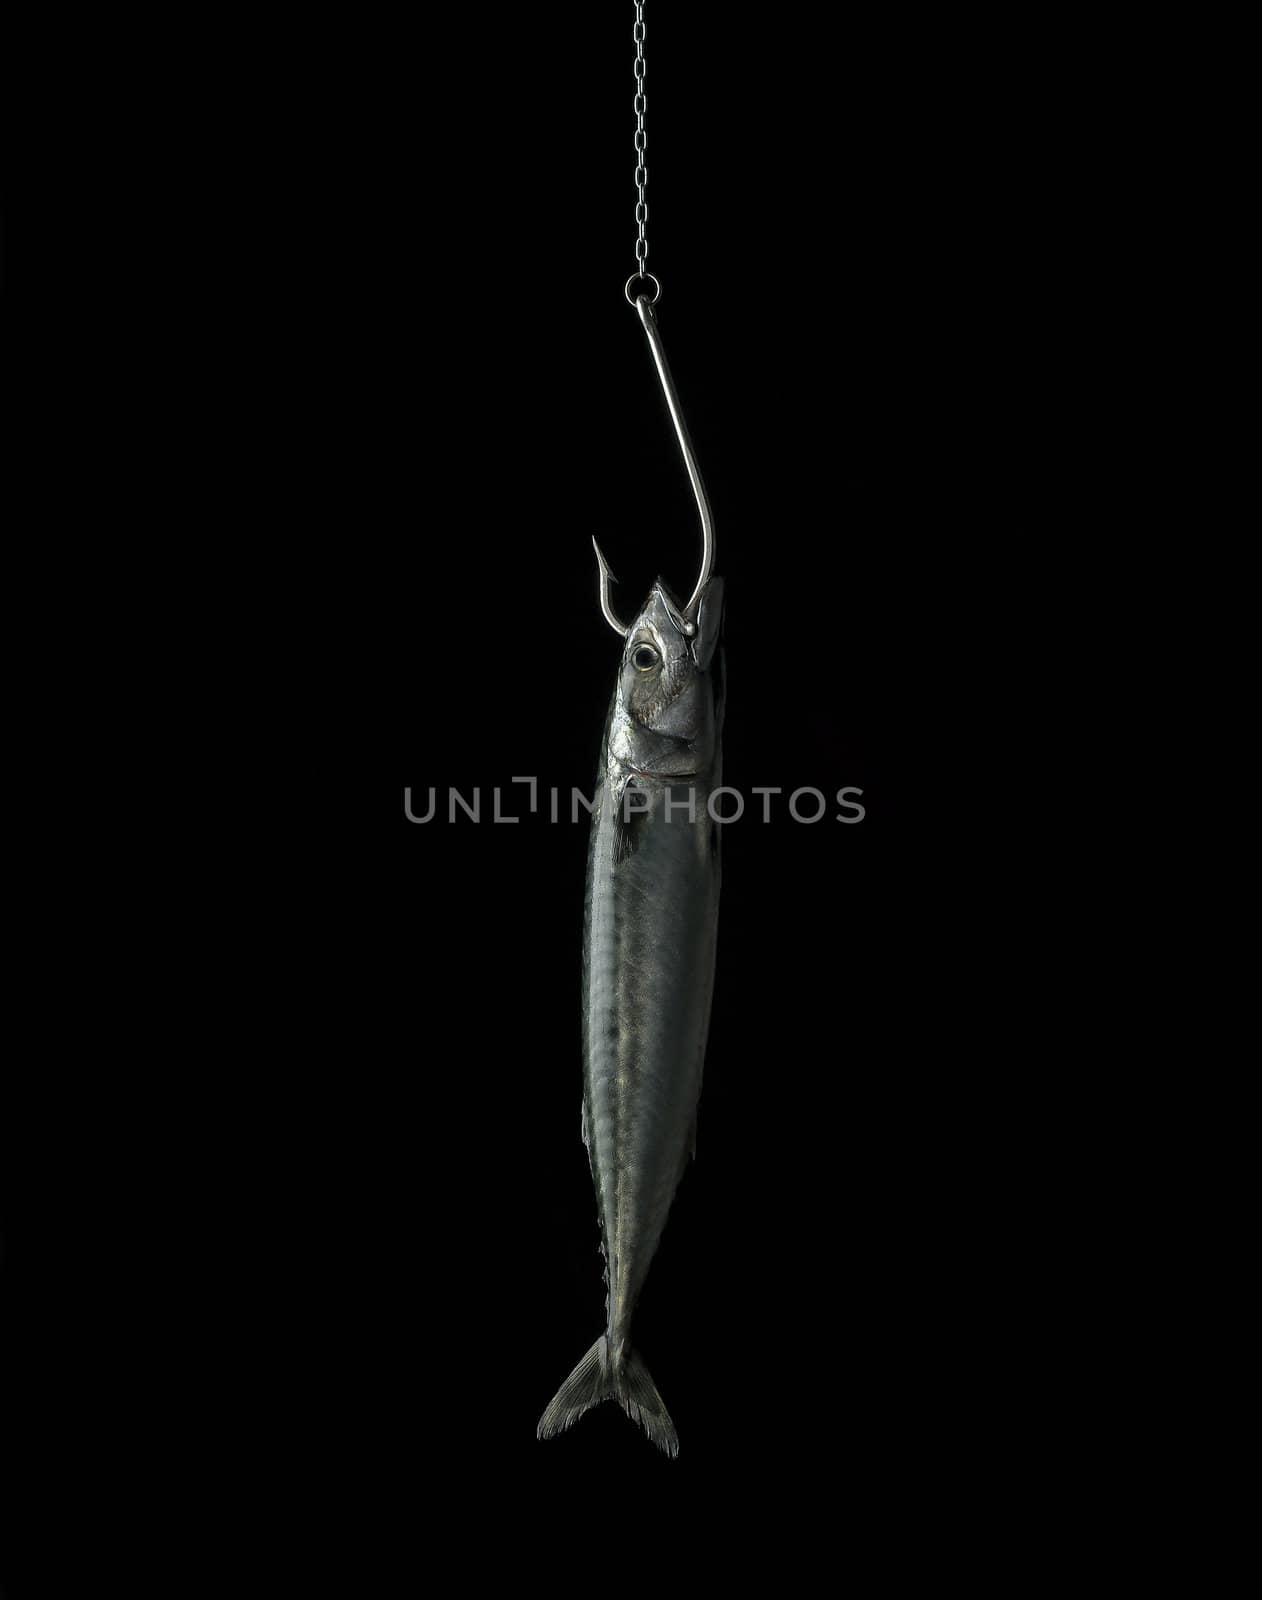 Hooked fish on black background